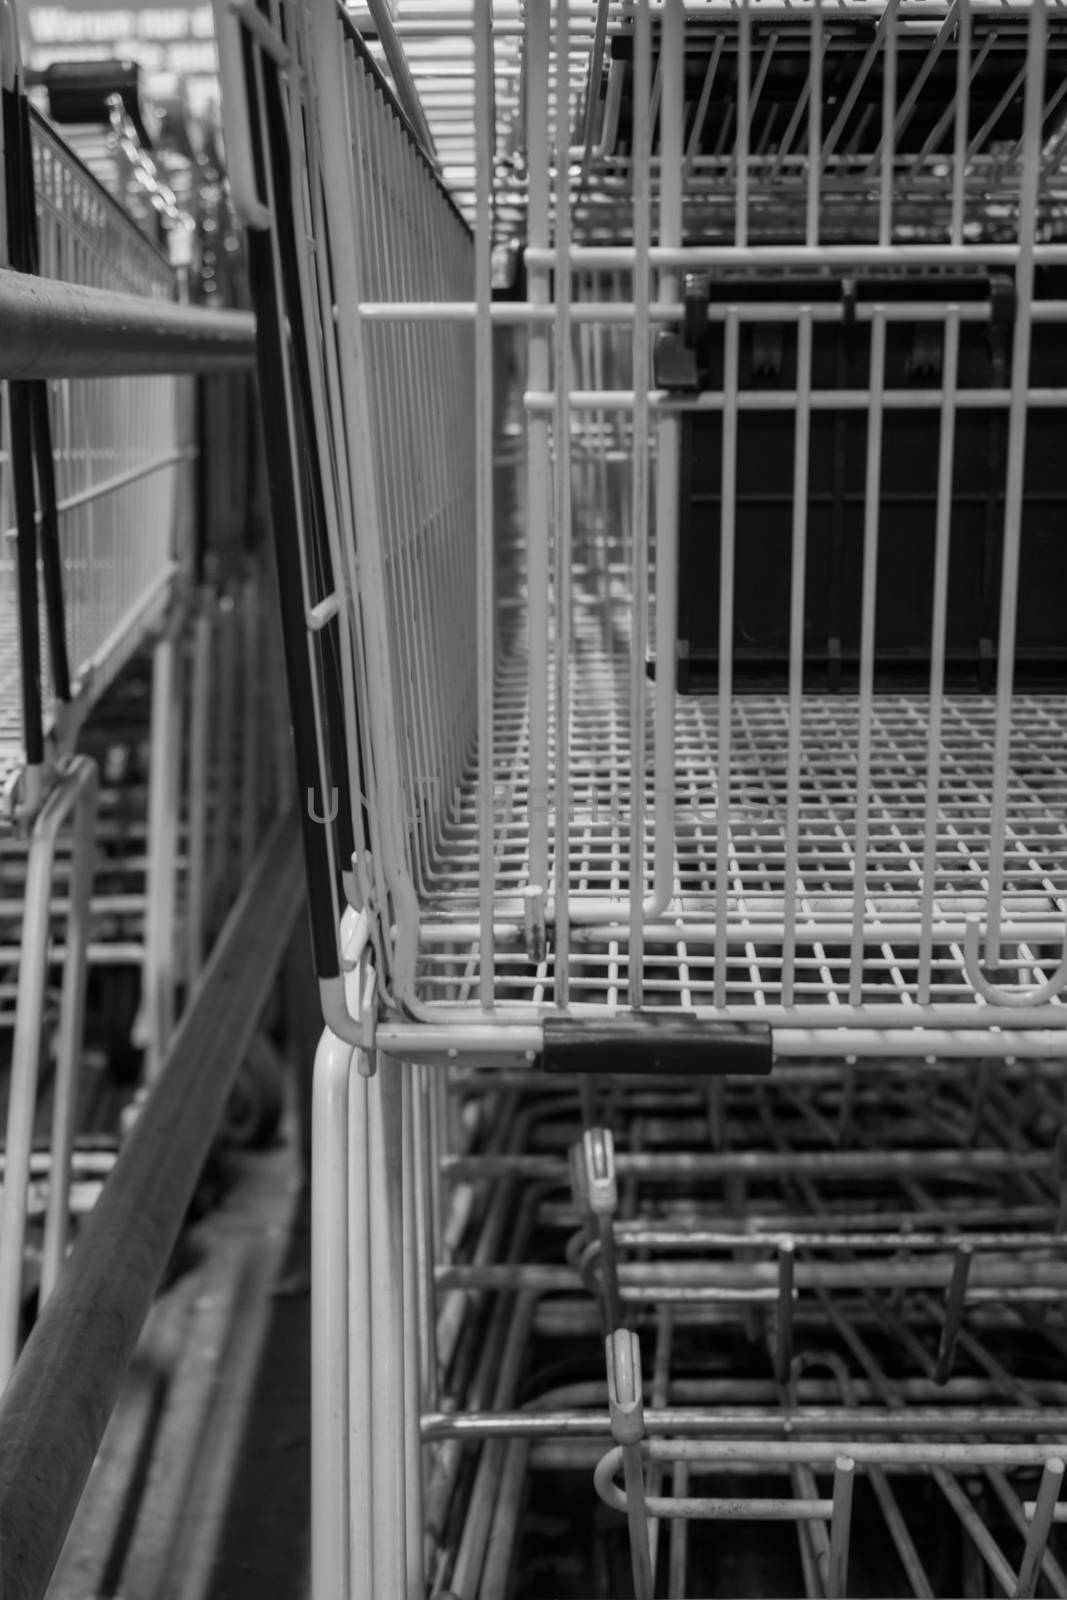 Many shopping carts of a supermarket